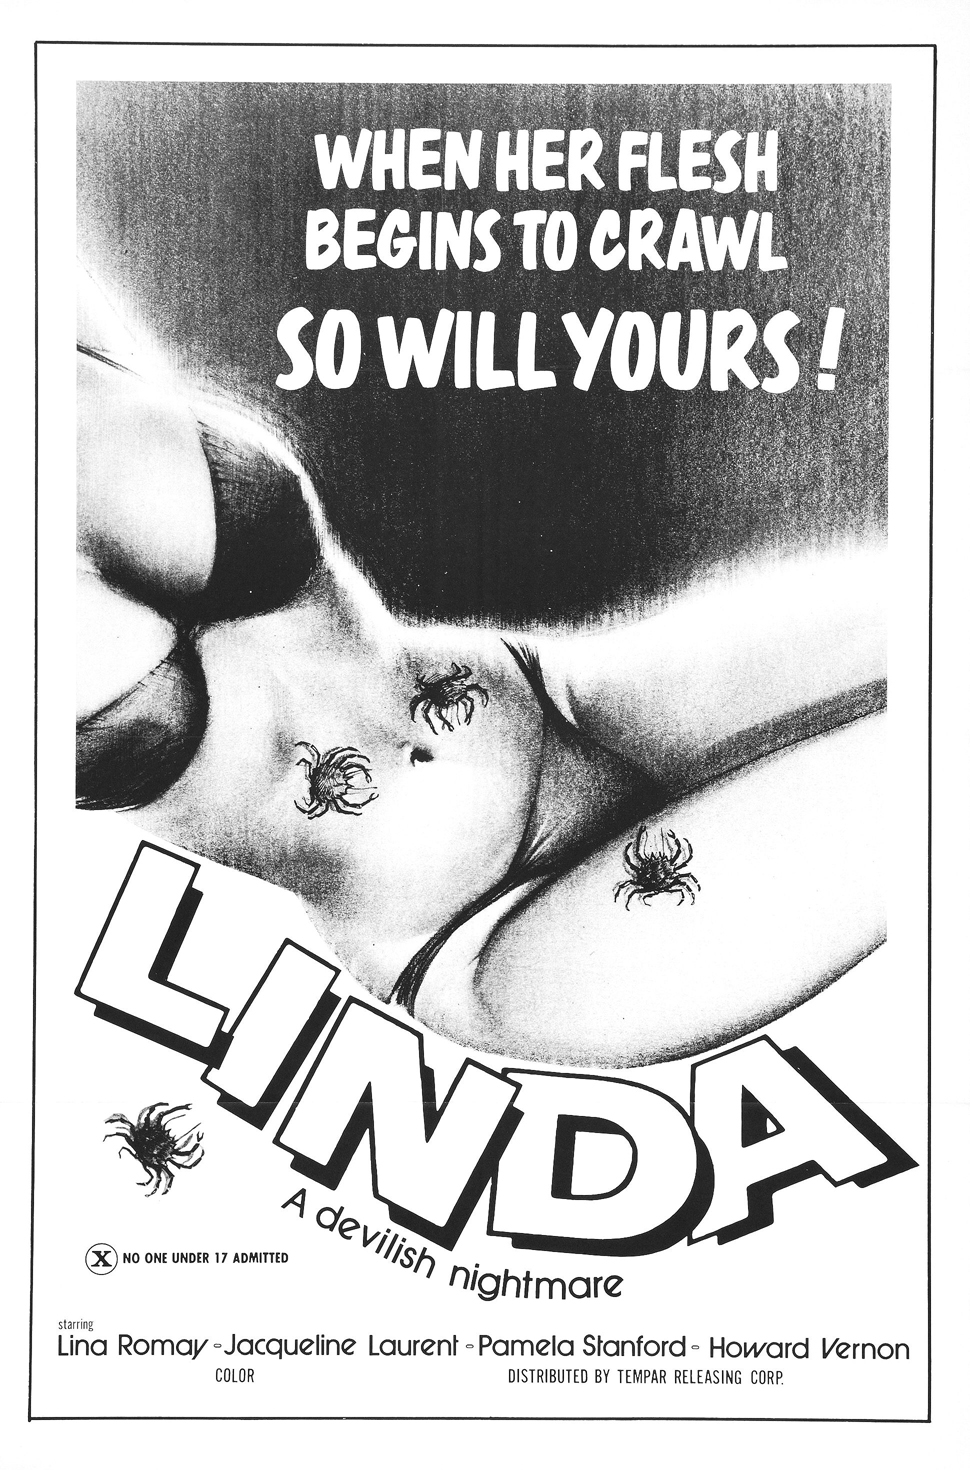 lorna-the-exorcist-as-linda-us-poster-copy-1.jpeg